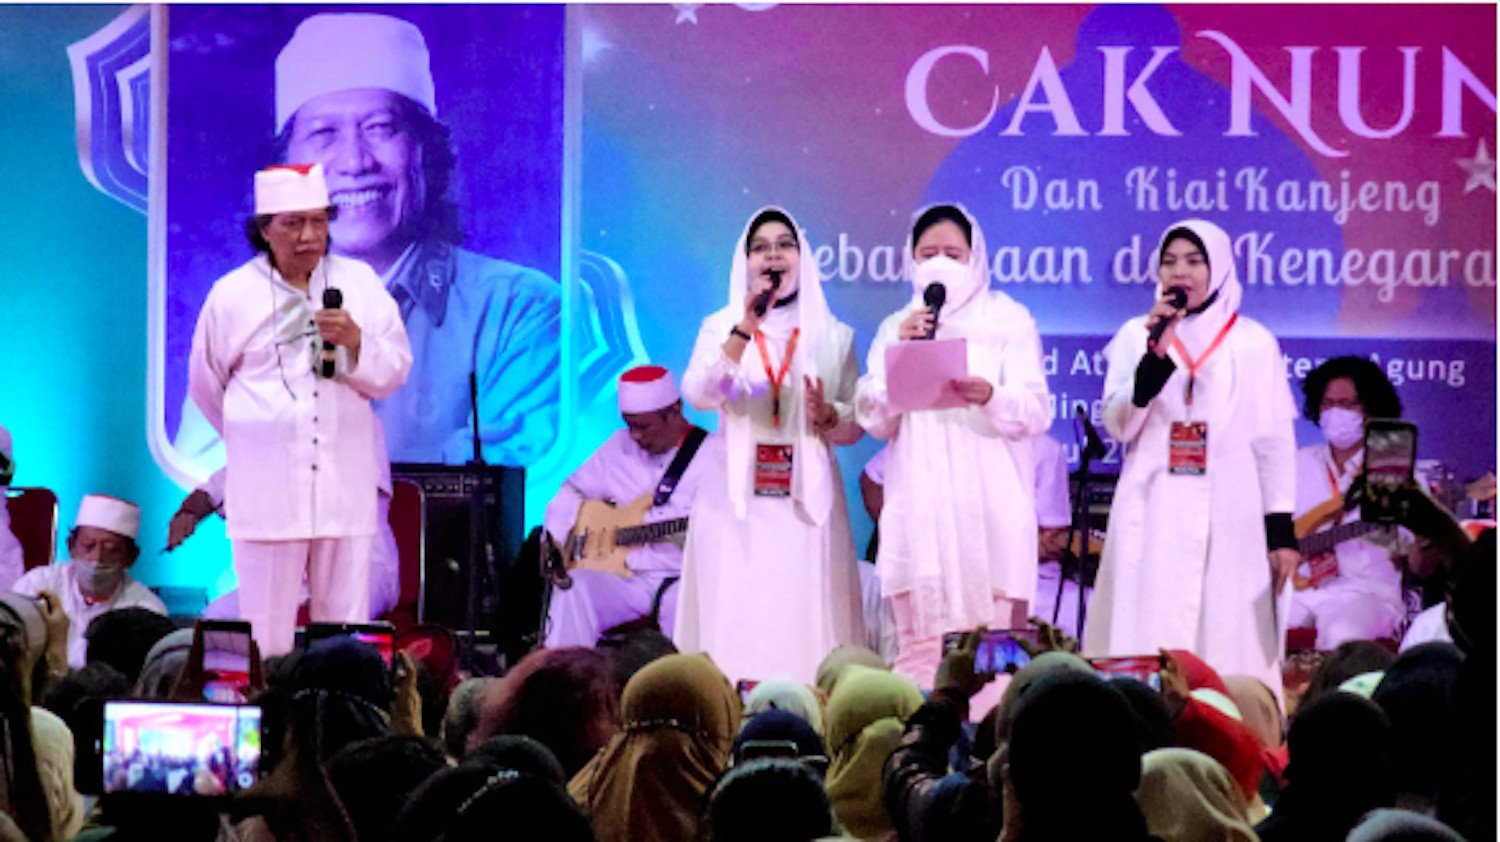 Acara Sinau Bareng Cak Nun, Puan: PDIP Tetap Berjuang agar Indonesia Lebih Baik